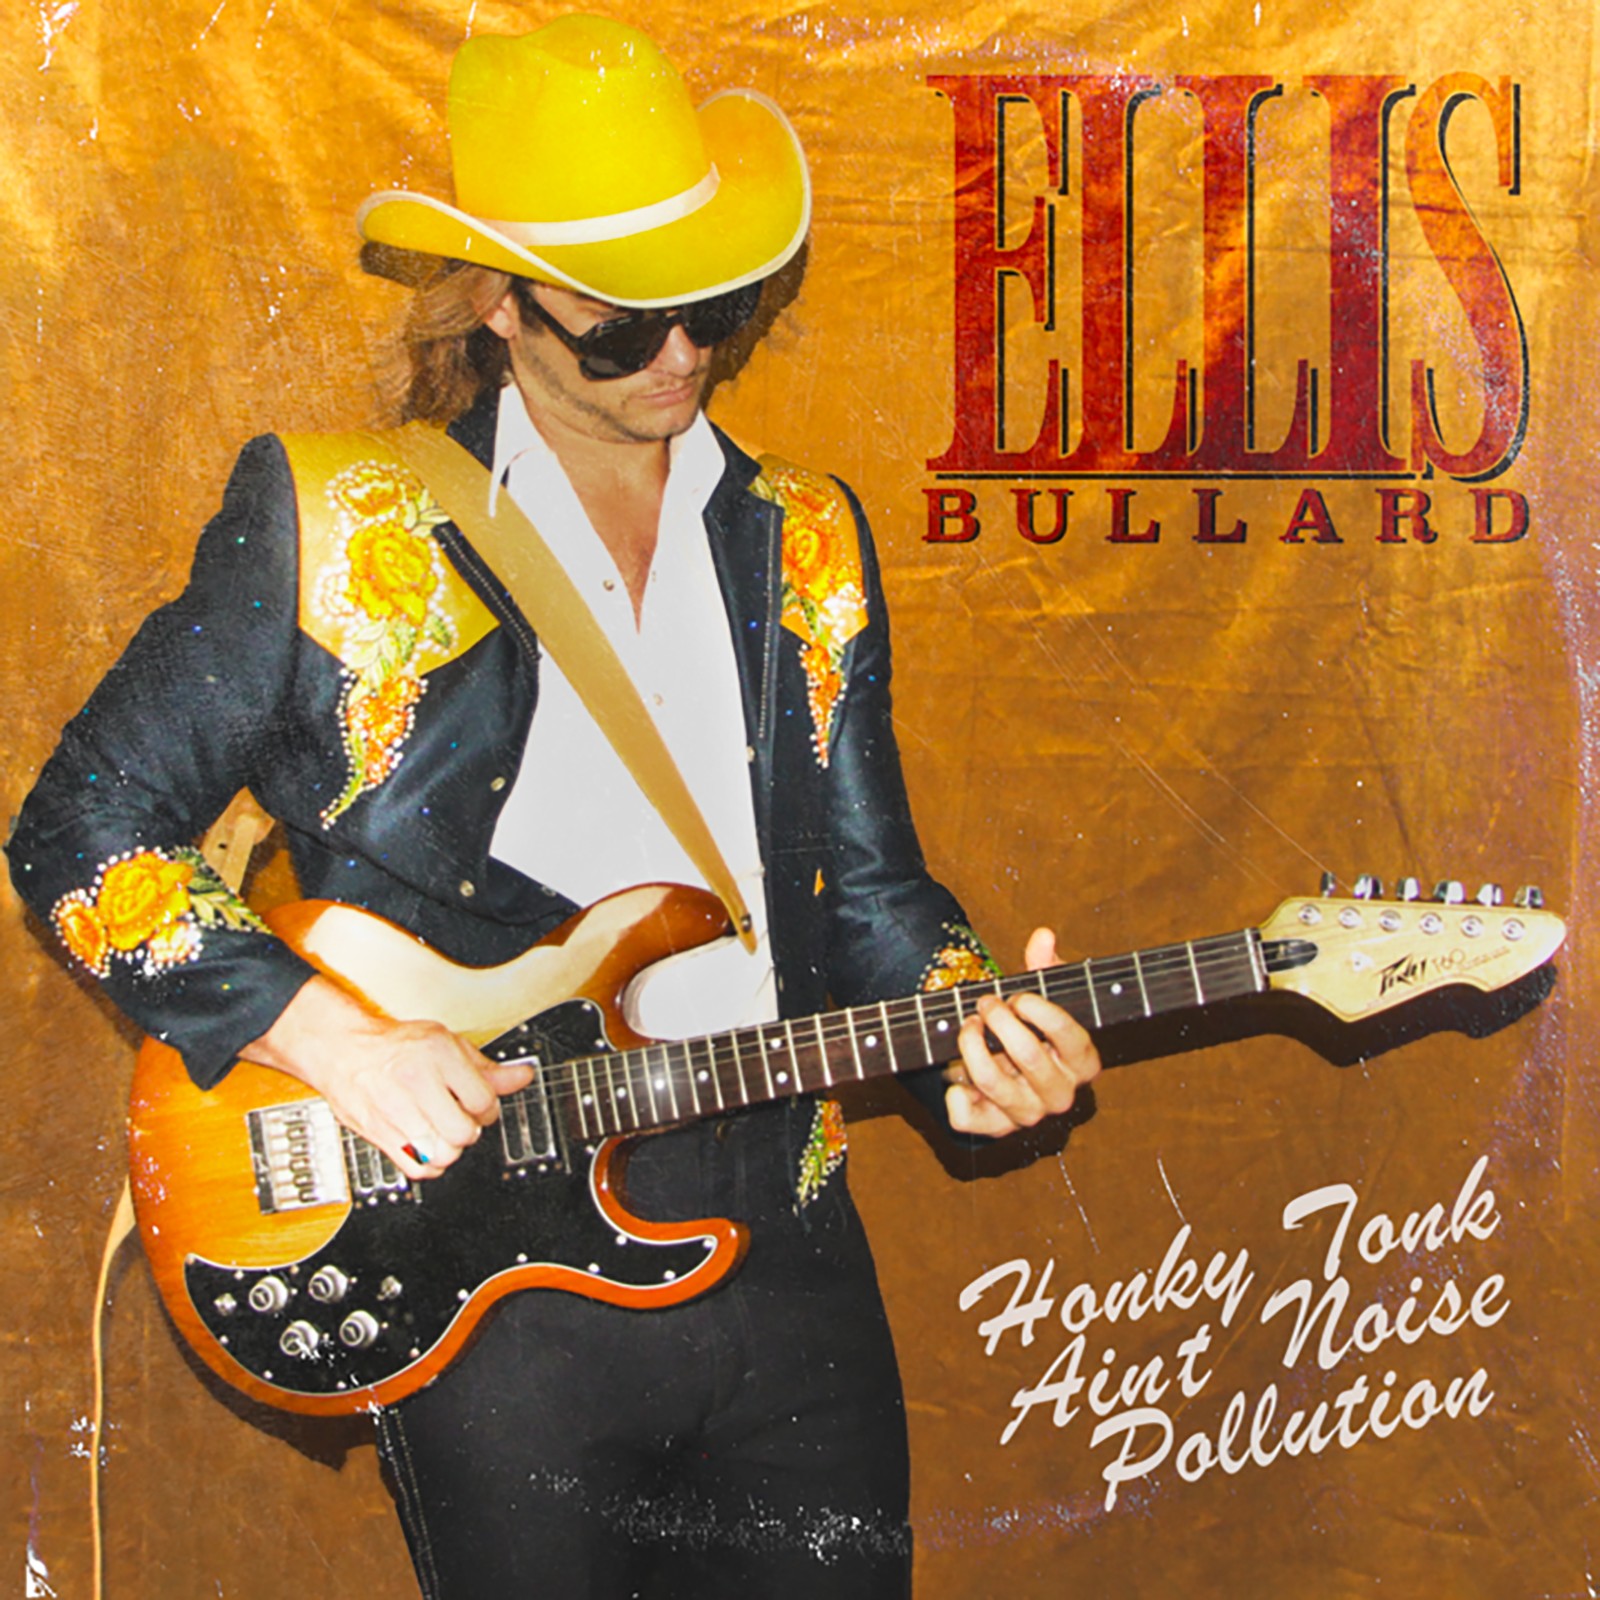 Ellis Bullard “Honky Tonk Aint Noise Pollution” single artwork